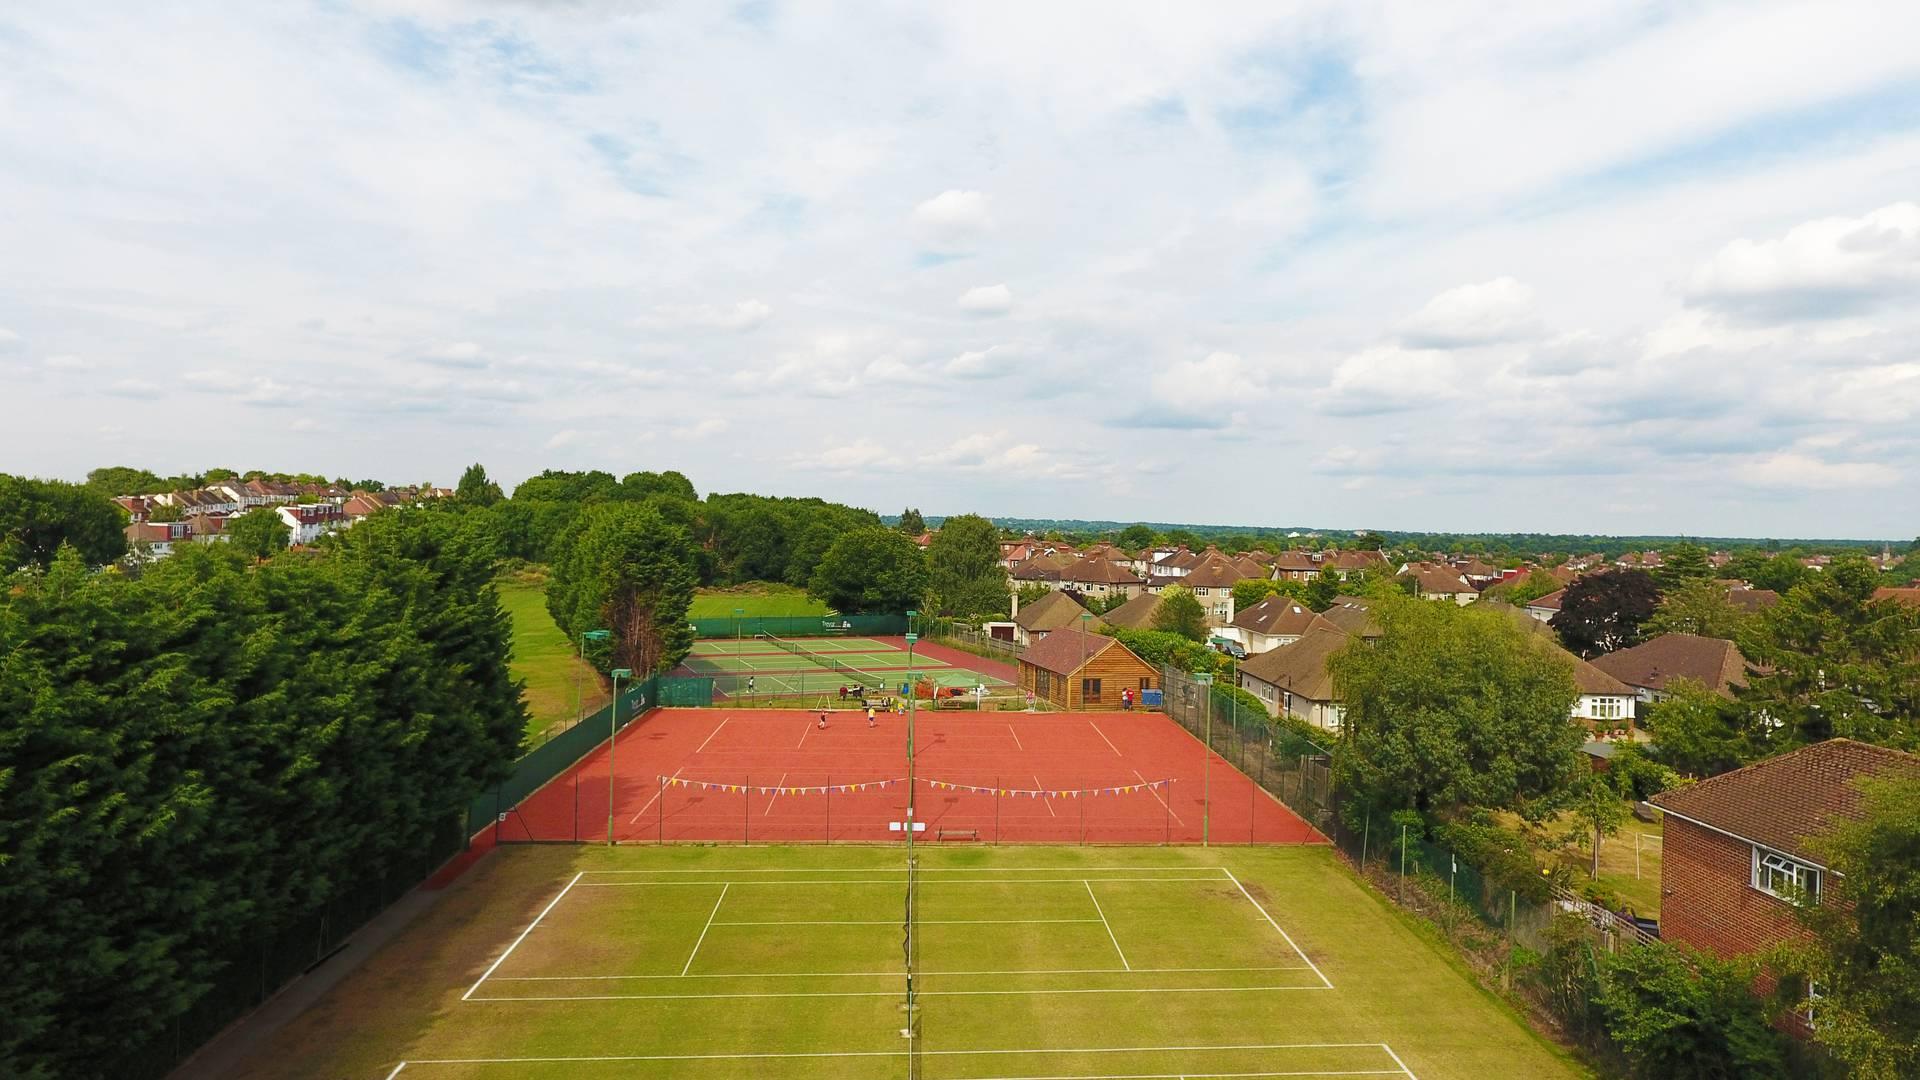 Wickham Park Tennis Club photo